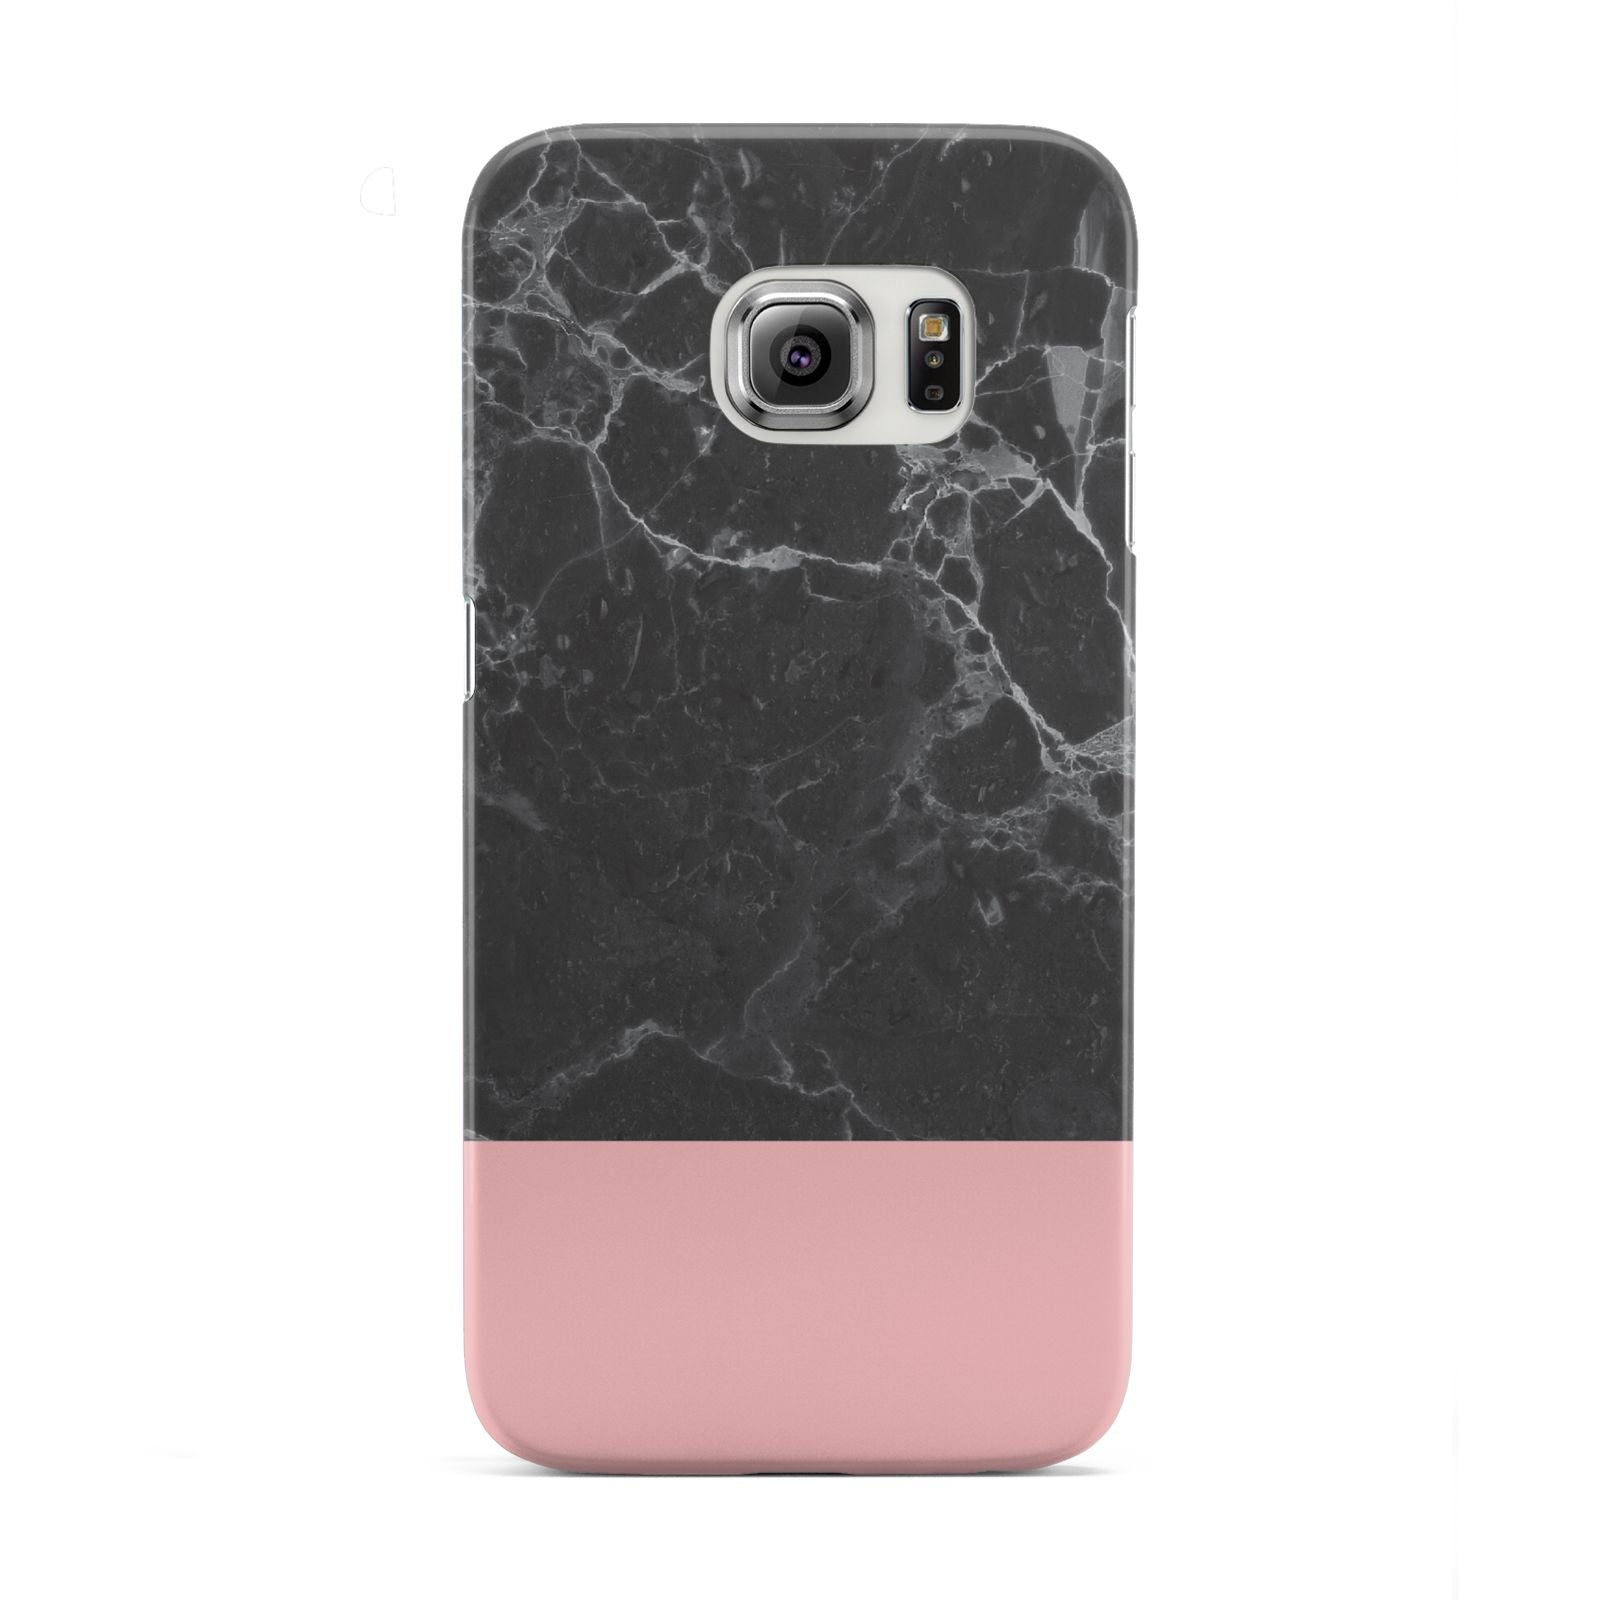 Marble Black Pink Samsung Galaxy S6 Edge Case